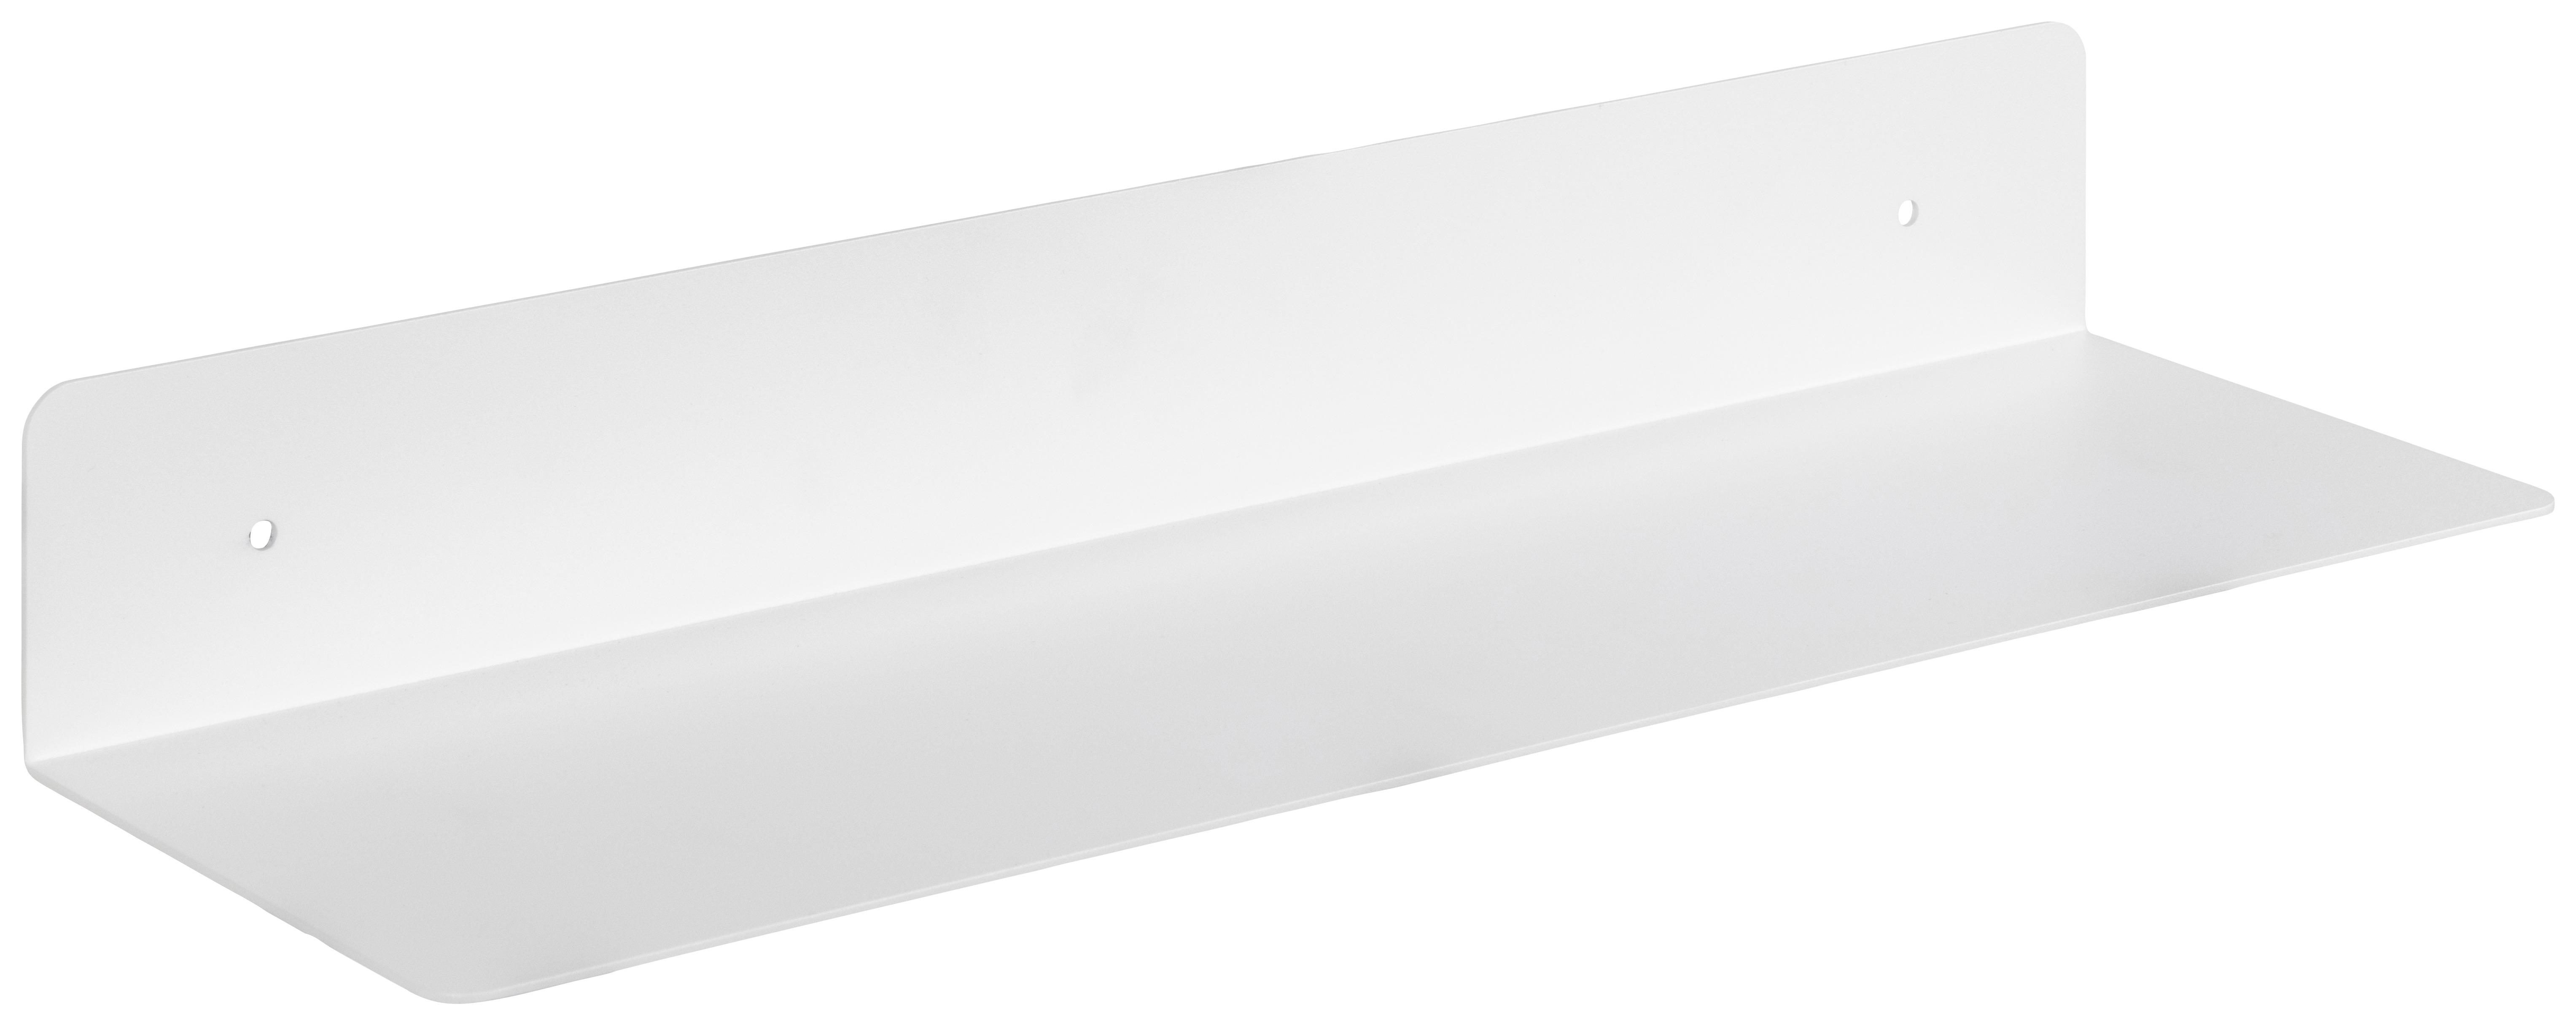 Wandboard Joilet B: 50 cm Metall Weiß - Weiß, Trend, Metall (50/7/15cm) - MID.YOU